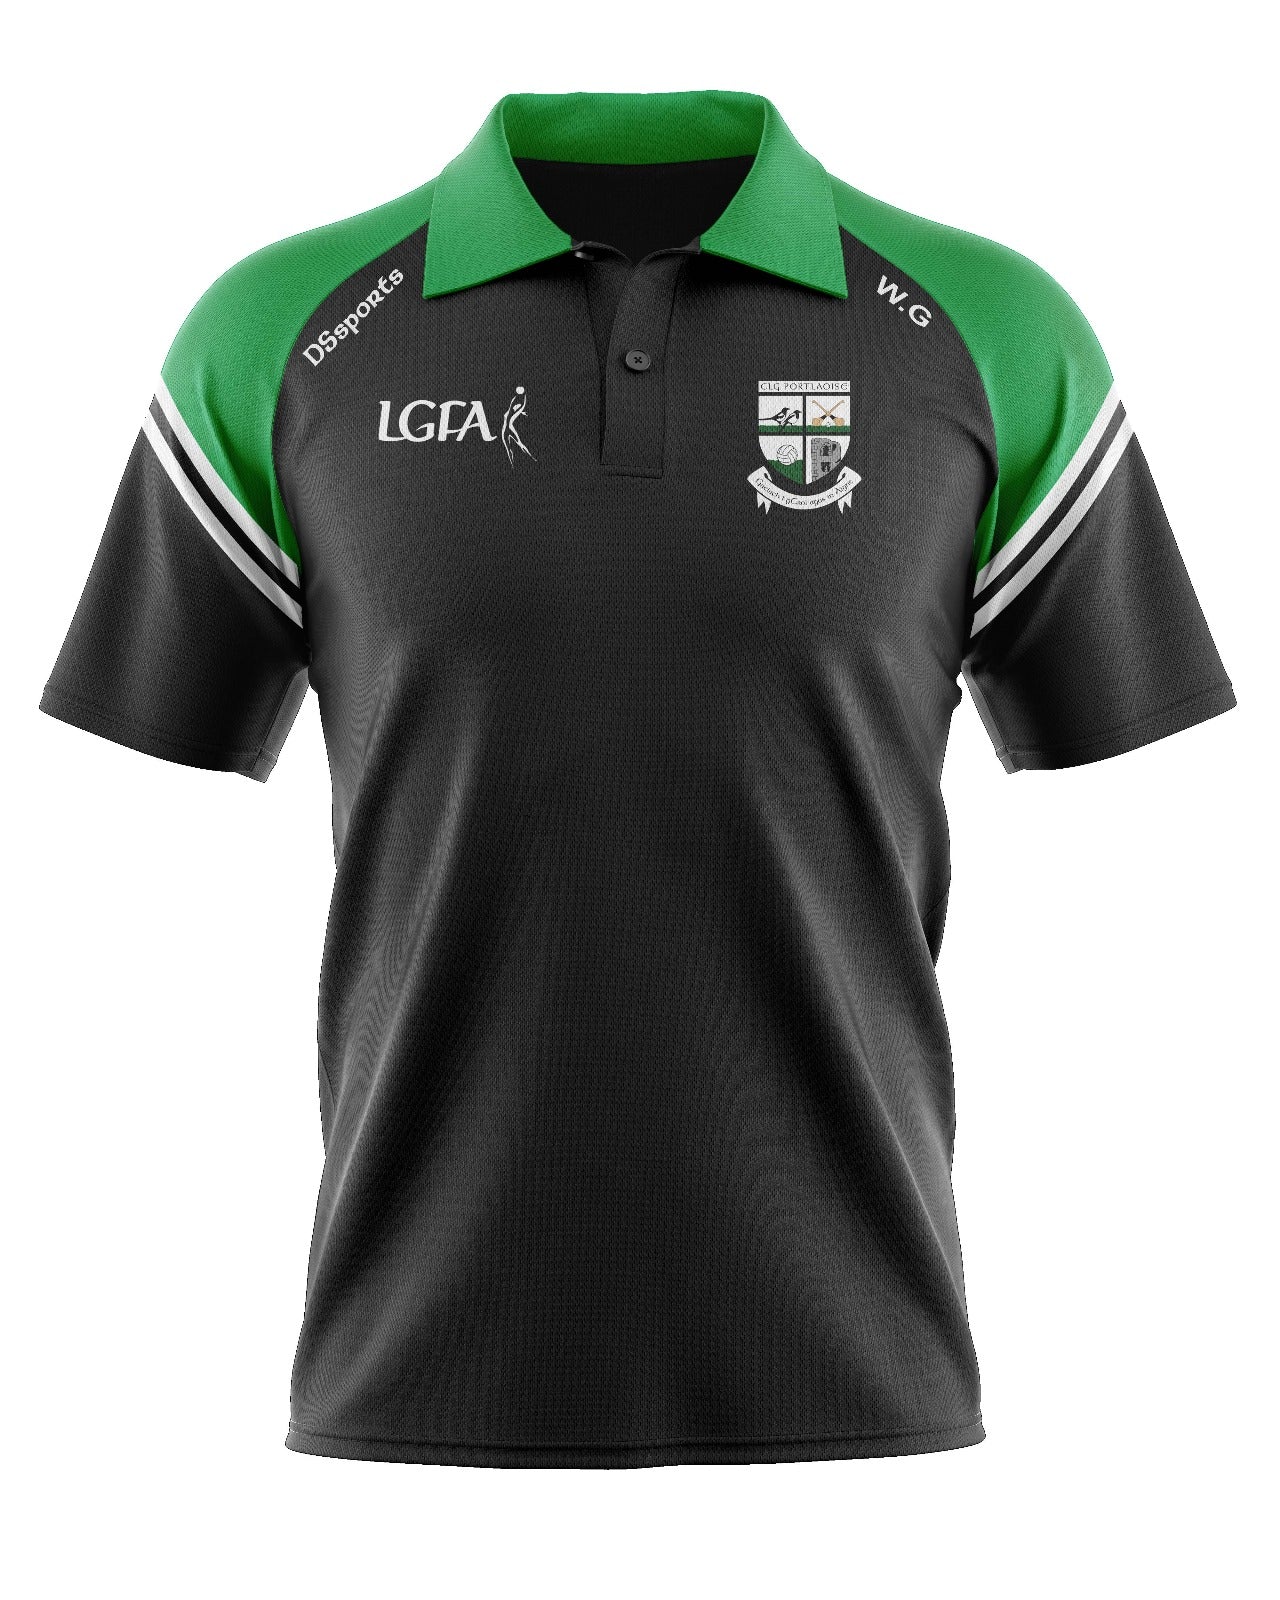 Portlaoise LGFA - Polo Shirt